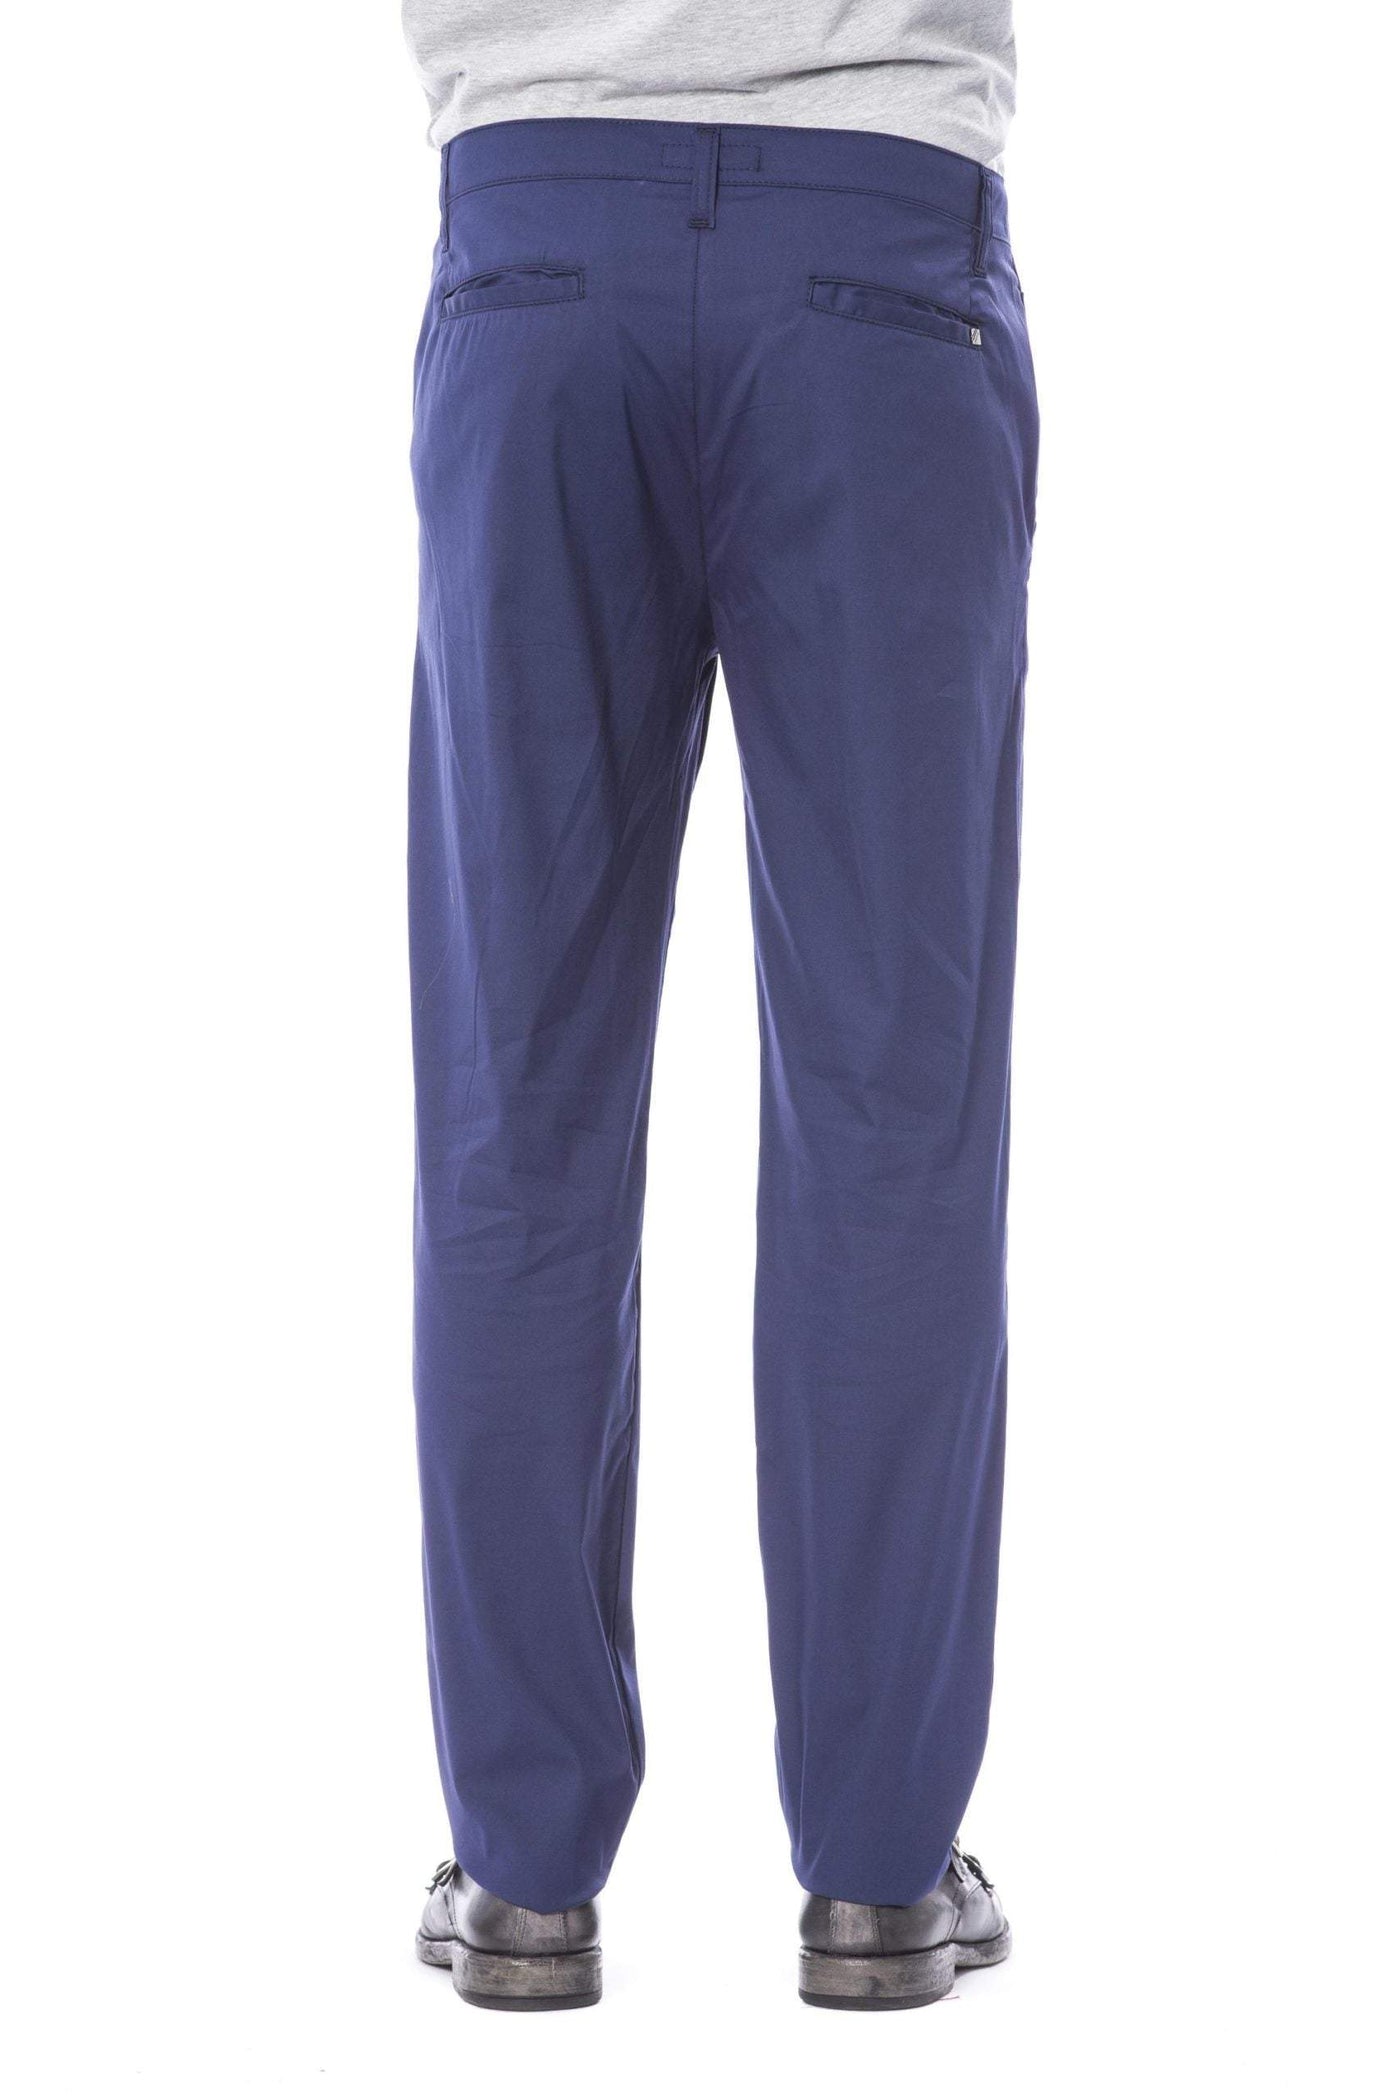 Verri Blue Cotton Jeans & Pant #men, Blue, feed-1, Jeans & Pants - Men - Clothing, Verri, W30, W33, W38, W40 at SEYMAYKA